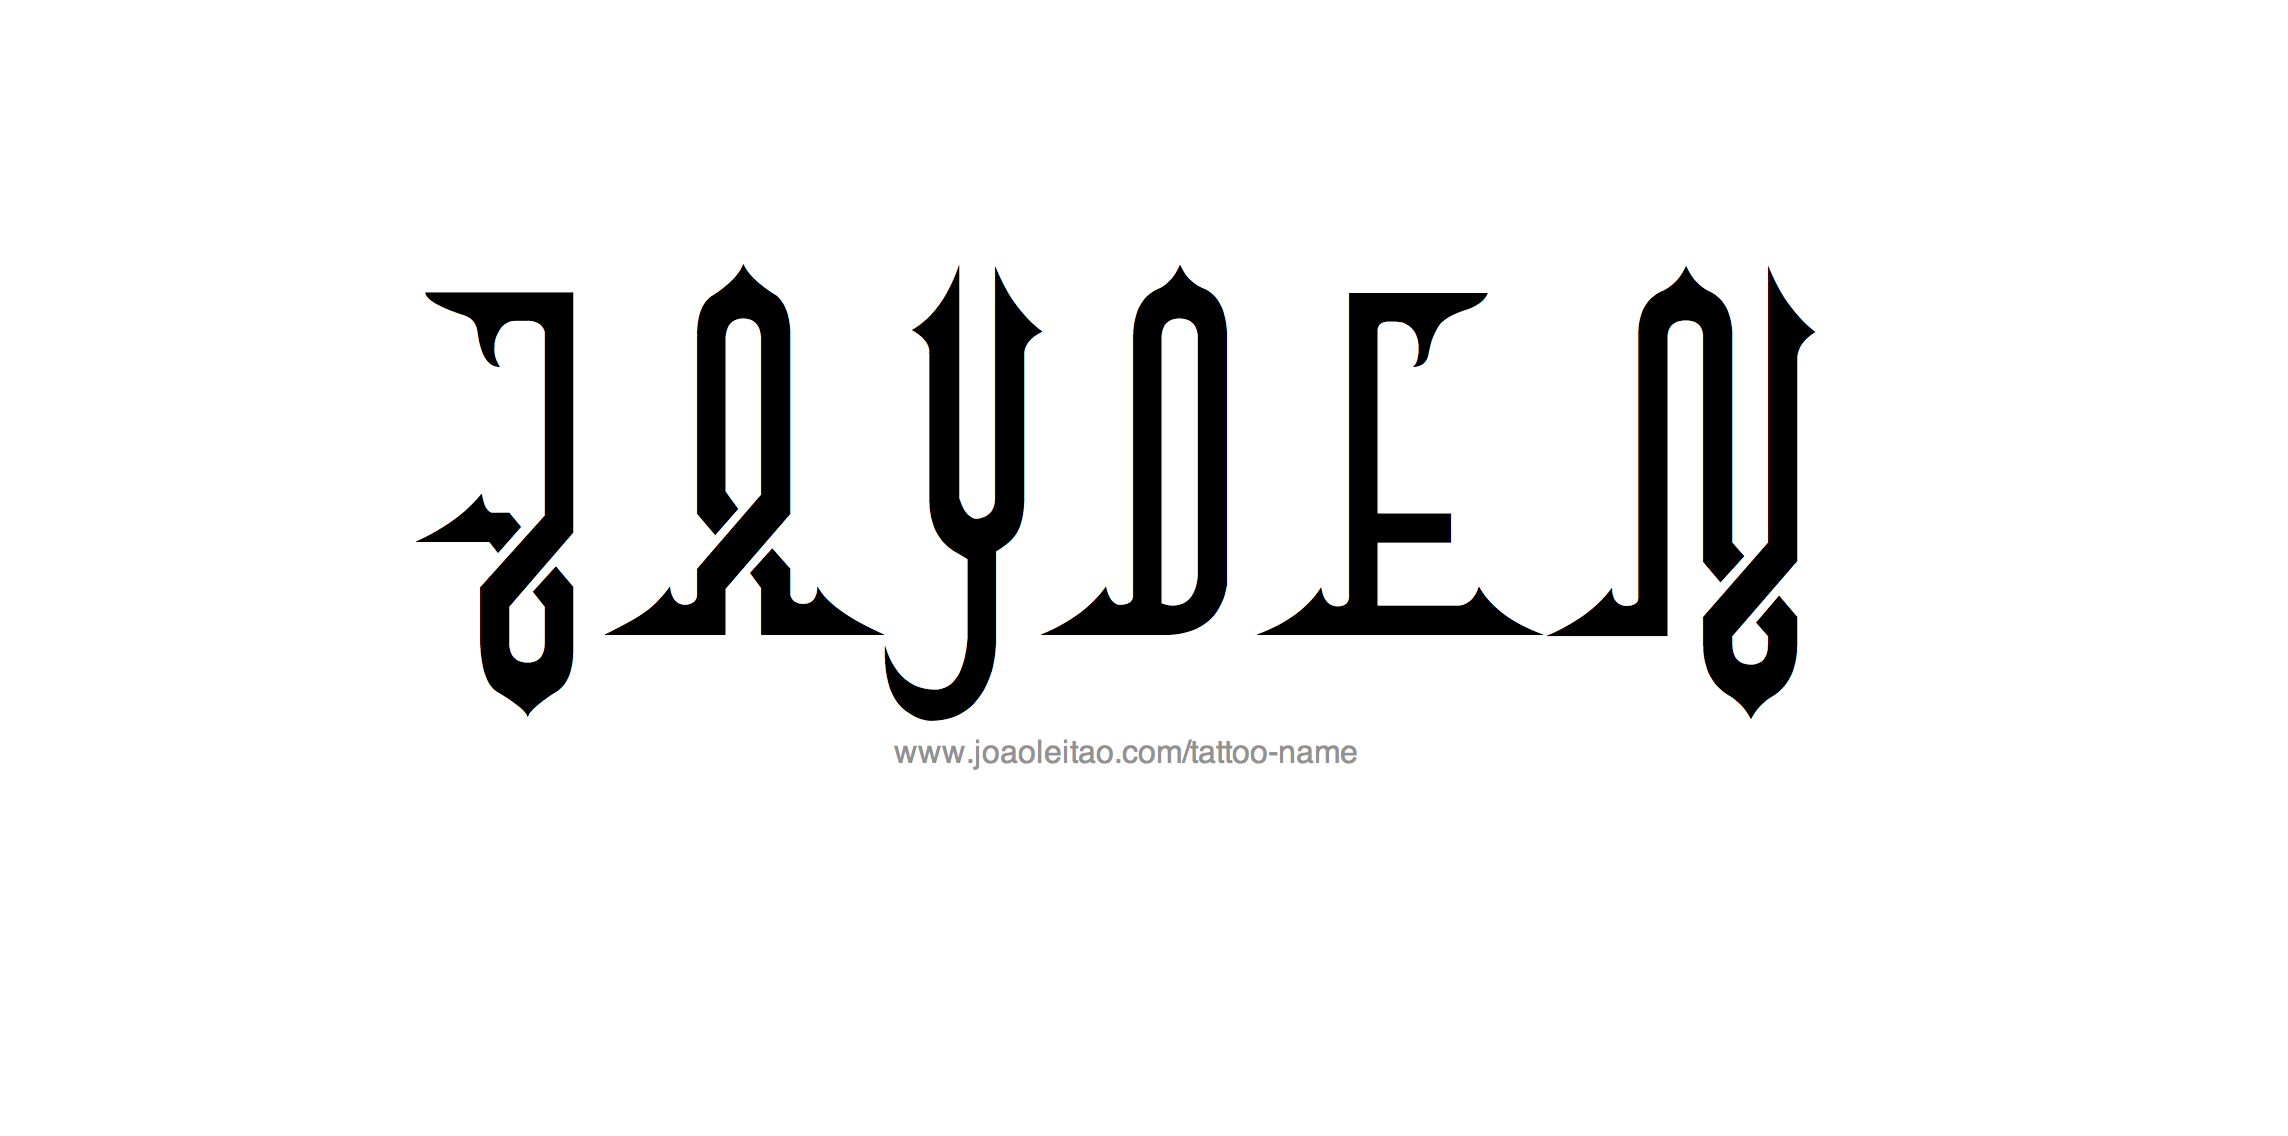 Tattoo Design Name Jayden